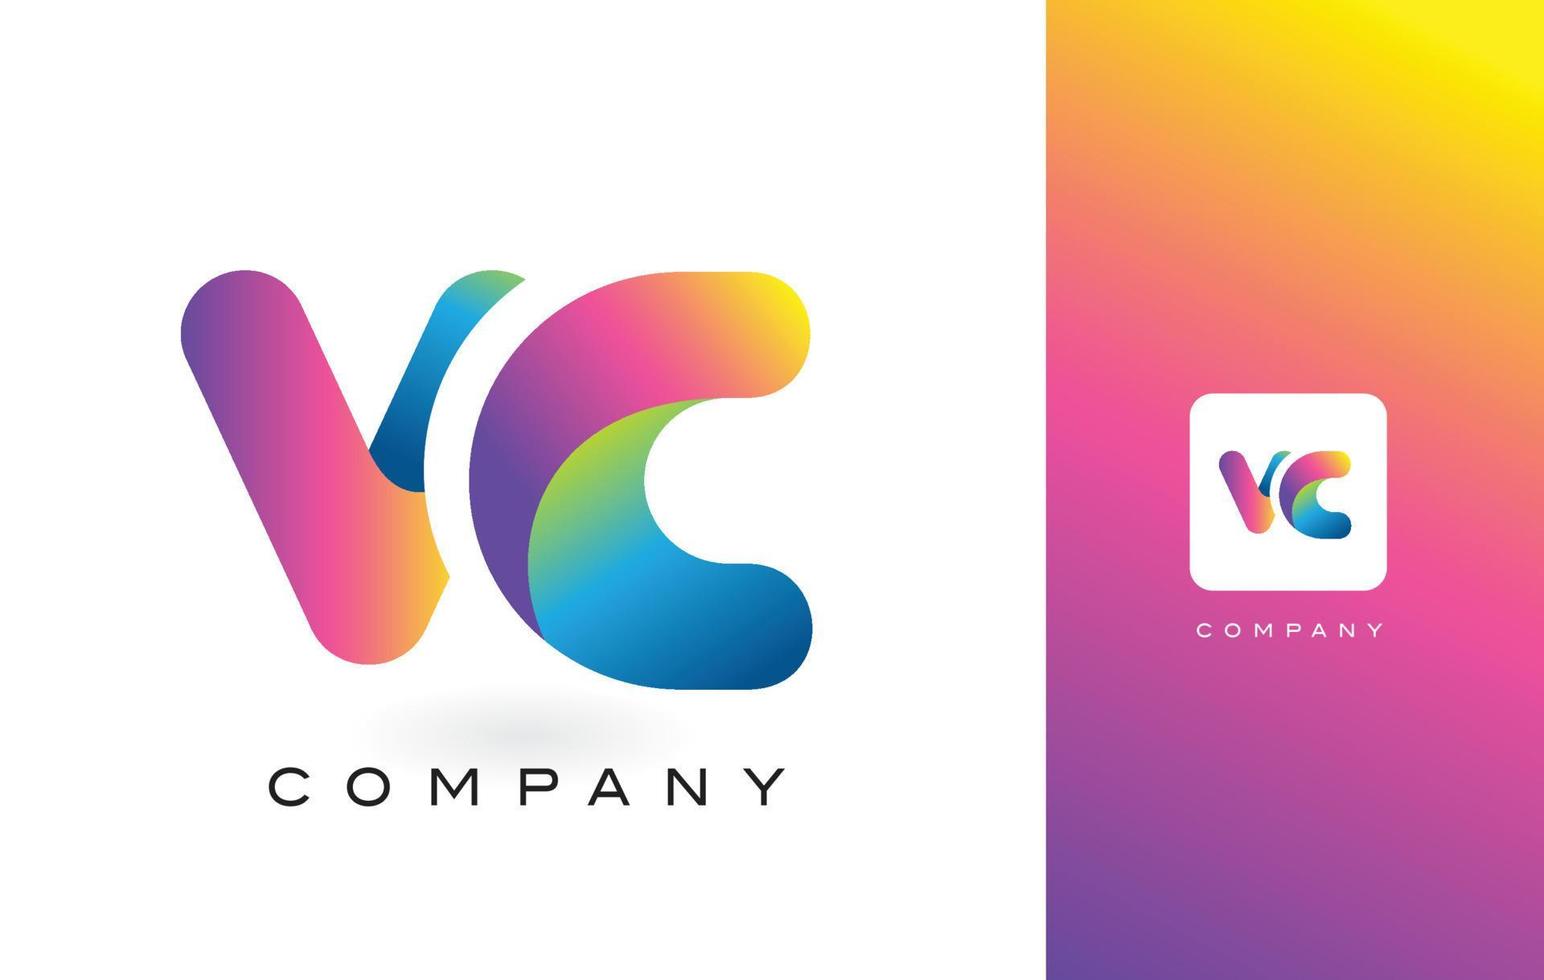 carta do logotipo de vc com cores vibrantes e lindas do arco-íris. vetor de letras roxas e magenta na moda colorida.